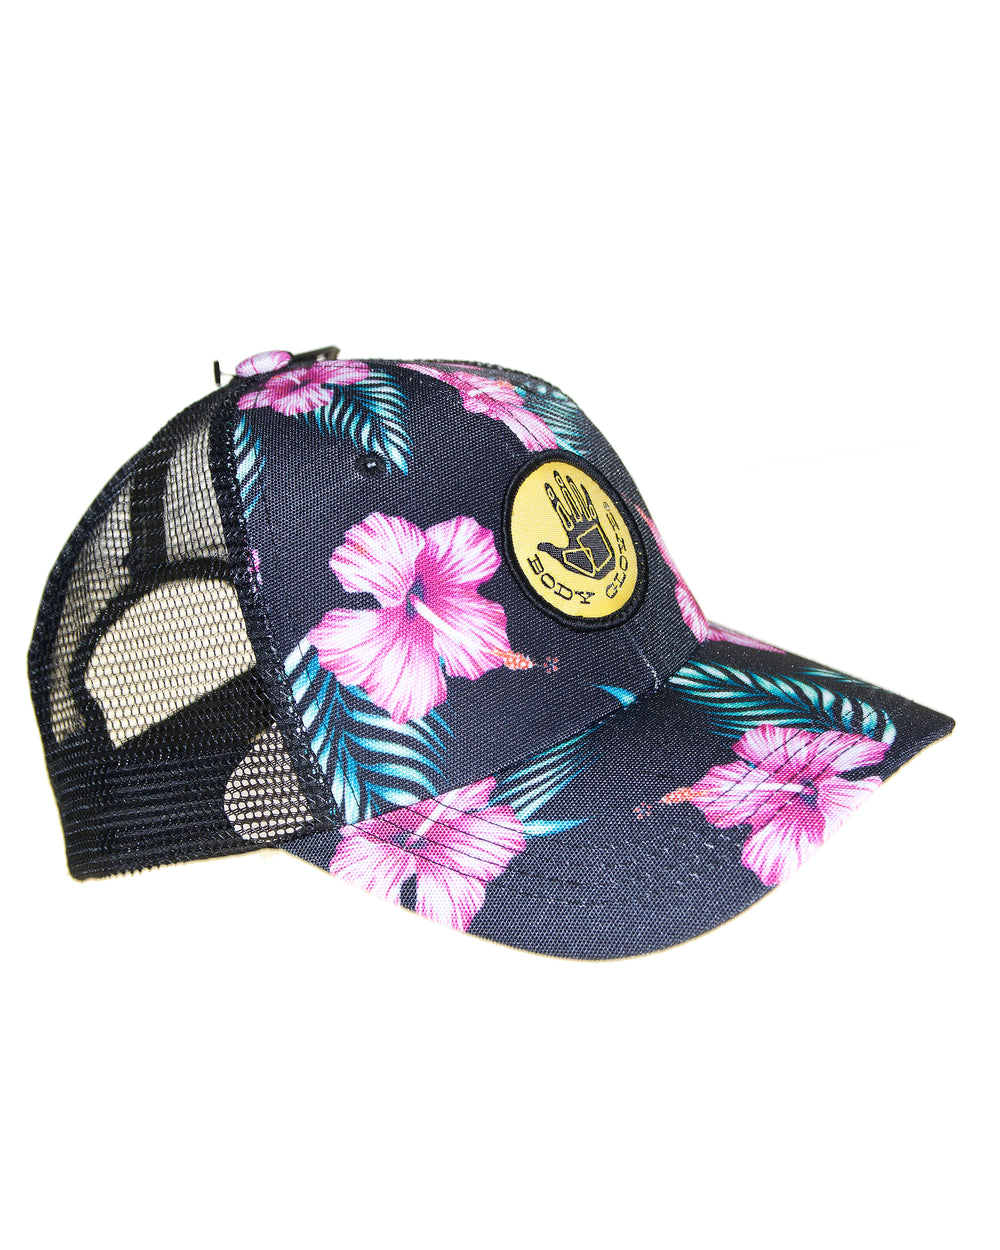 Printed Floral Trucker Hat - Multi